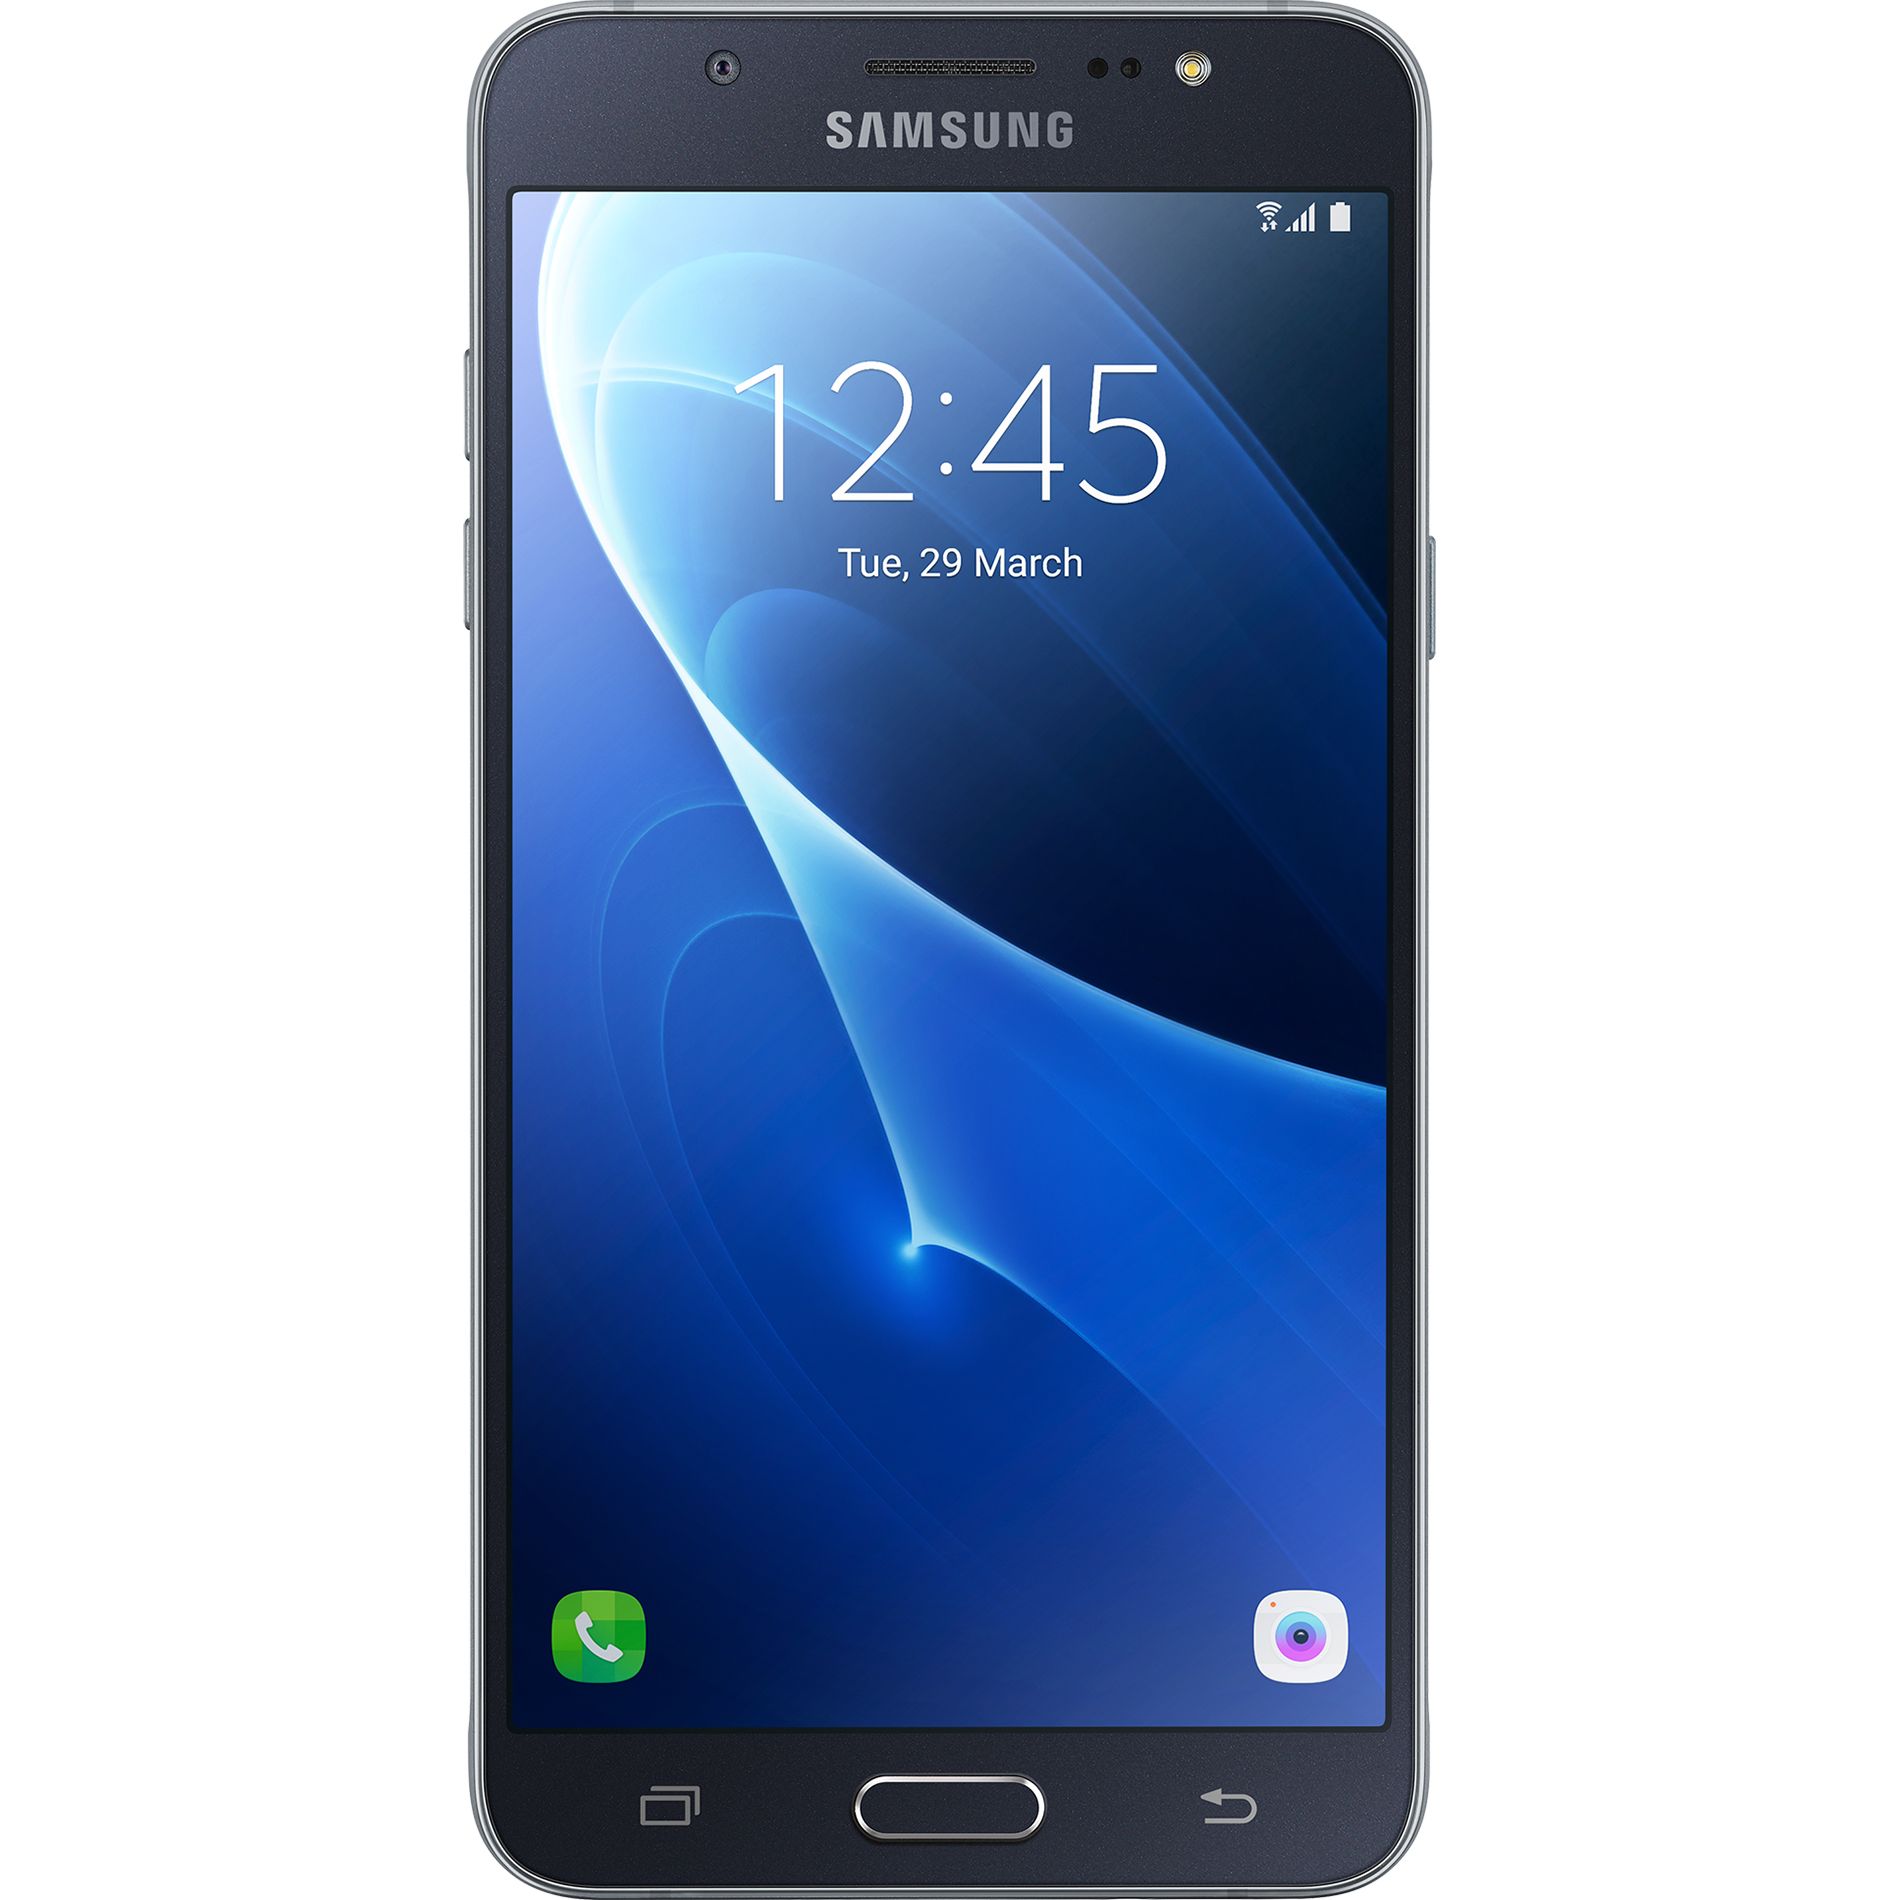 Telefon Mobil Samsung J710 Galaxy J7 (2016) Dual SIM 4G Black title=Telefon Mobil Samsung J710 Galaxy J7 (2016) Dual SIM 4G Black